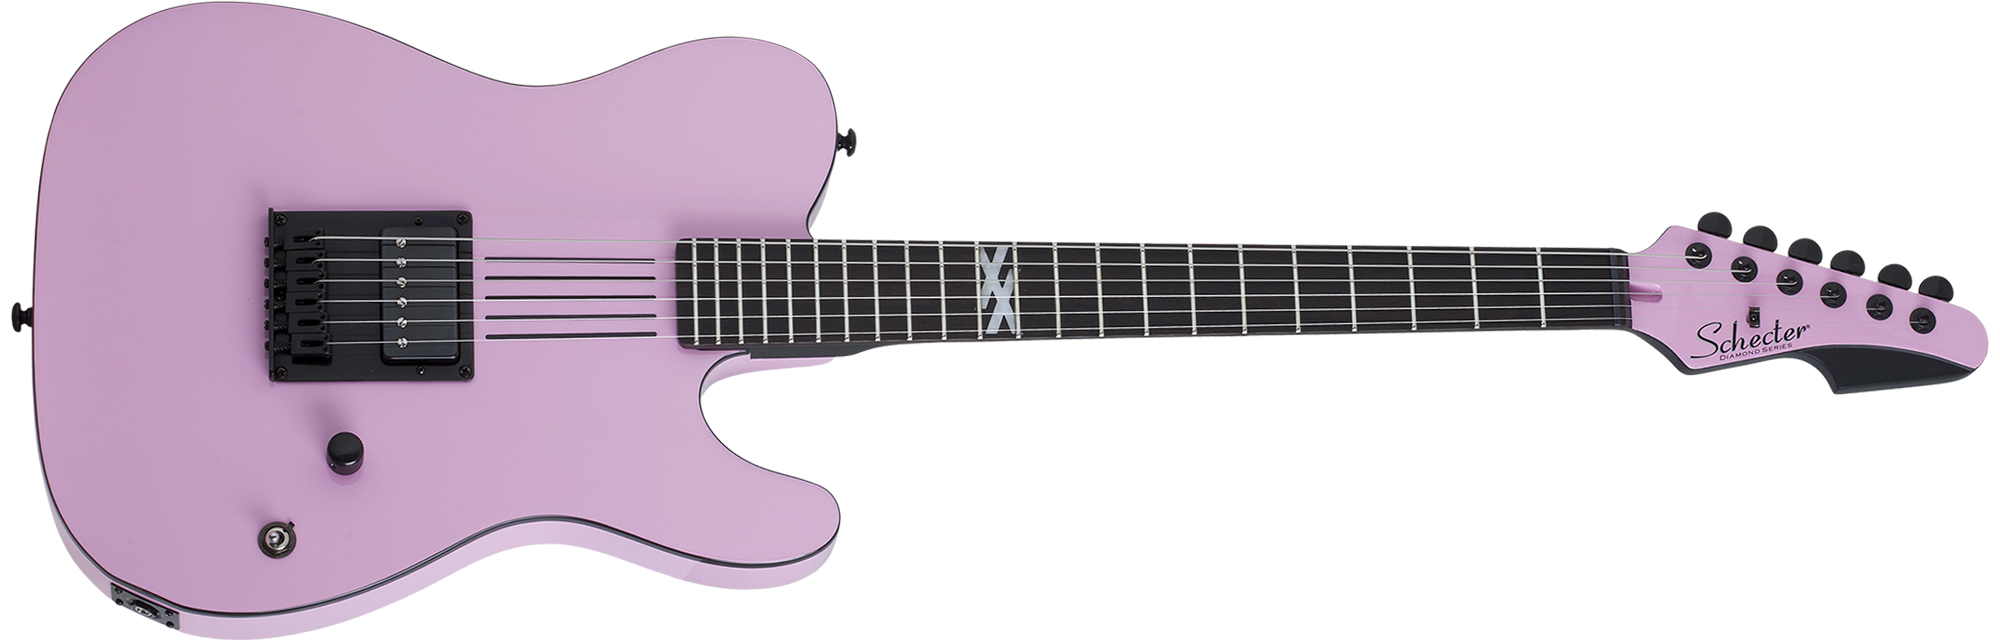 Schecter Machine Gun Kelly Signature PT Electric Guitar Tickets To My Downfall Pink 85-SHC